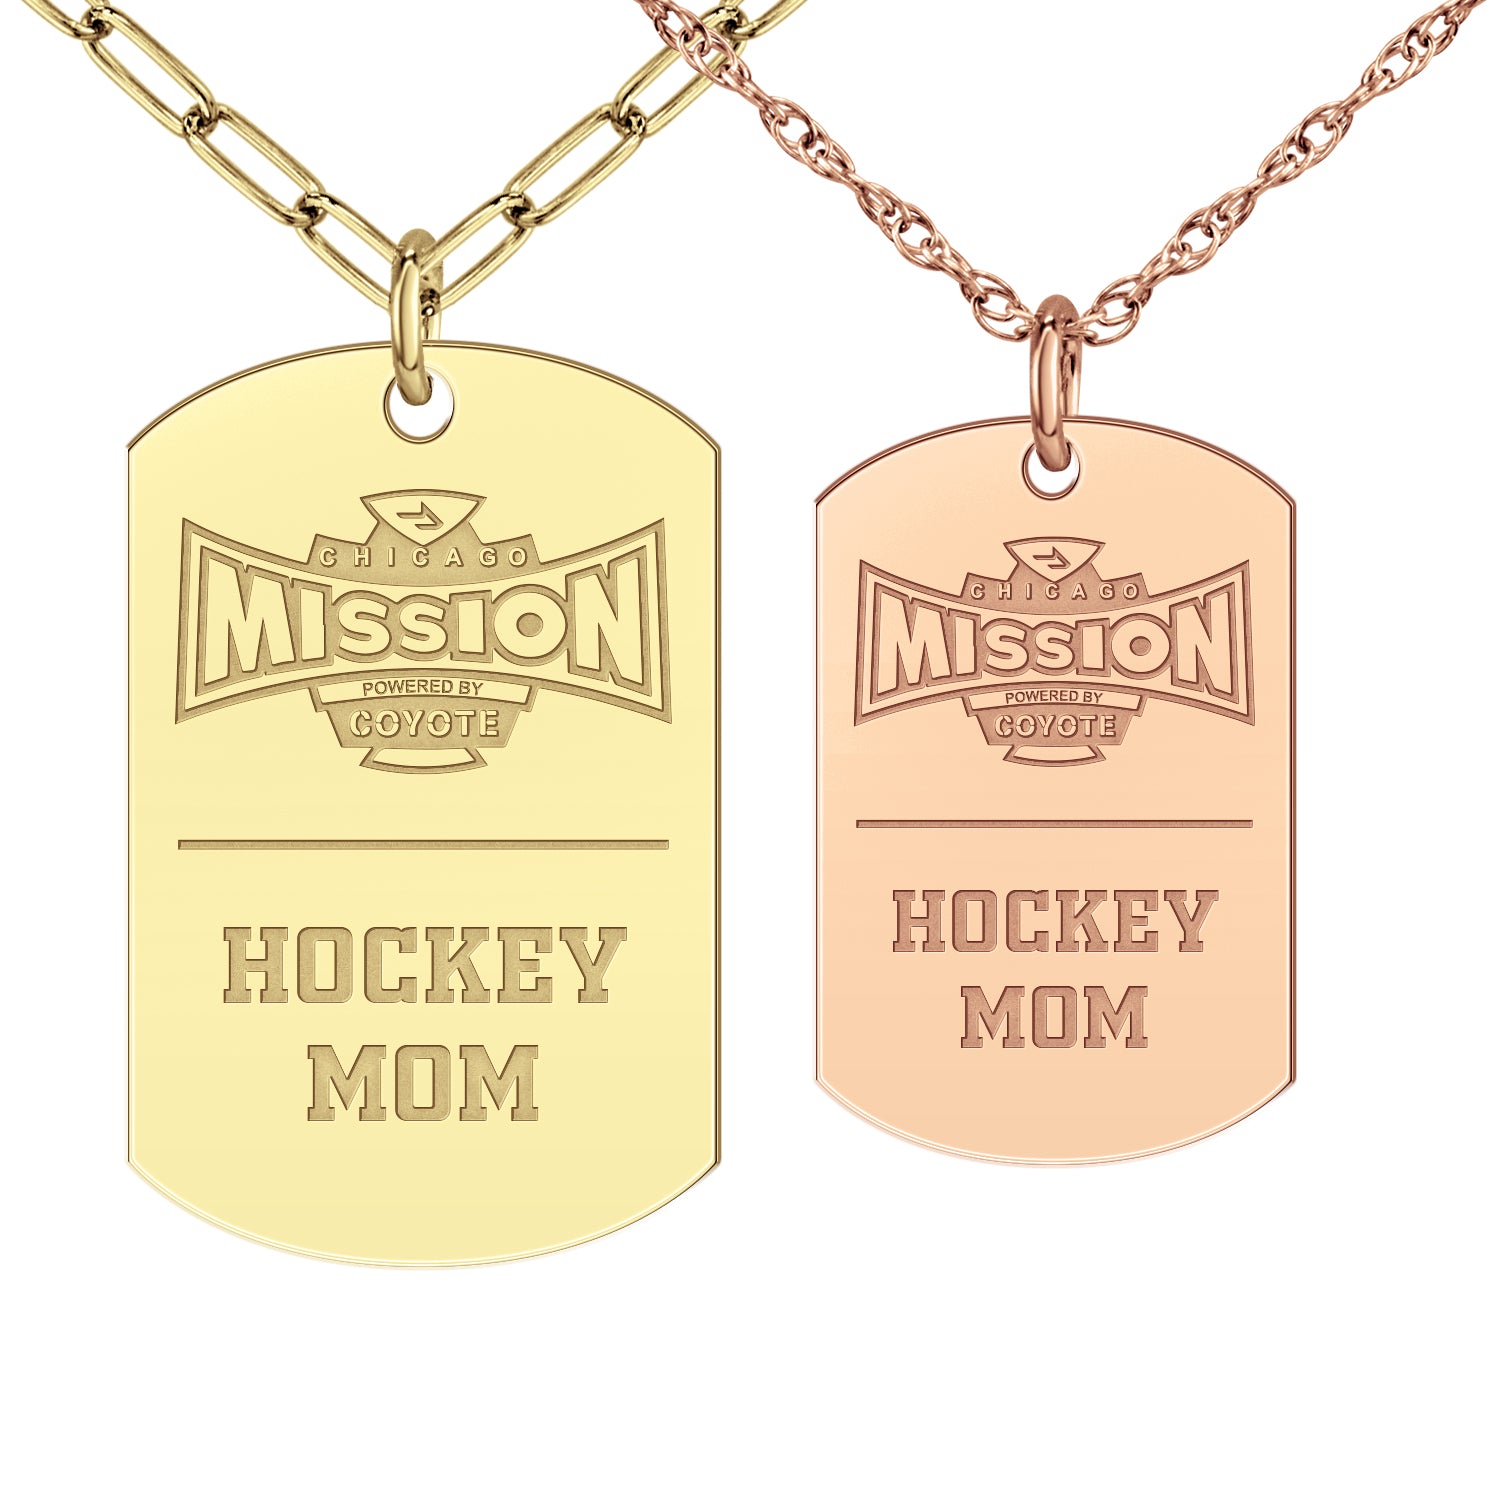 Chicago Mission Hockey Mom Tag